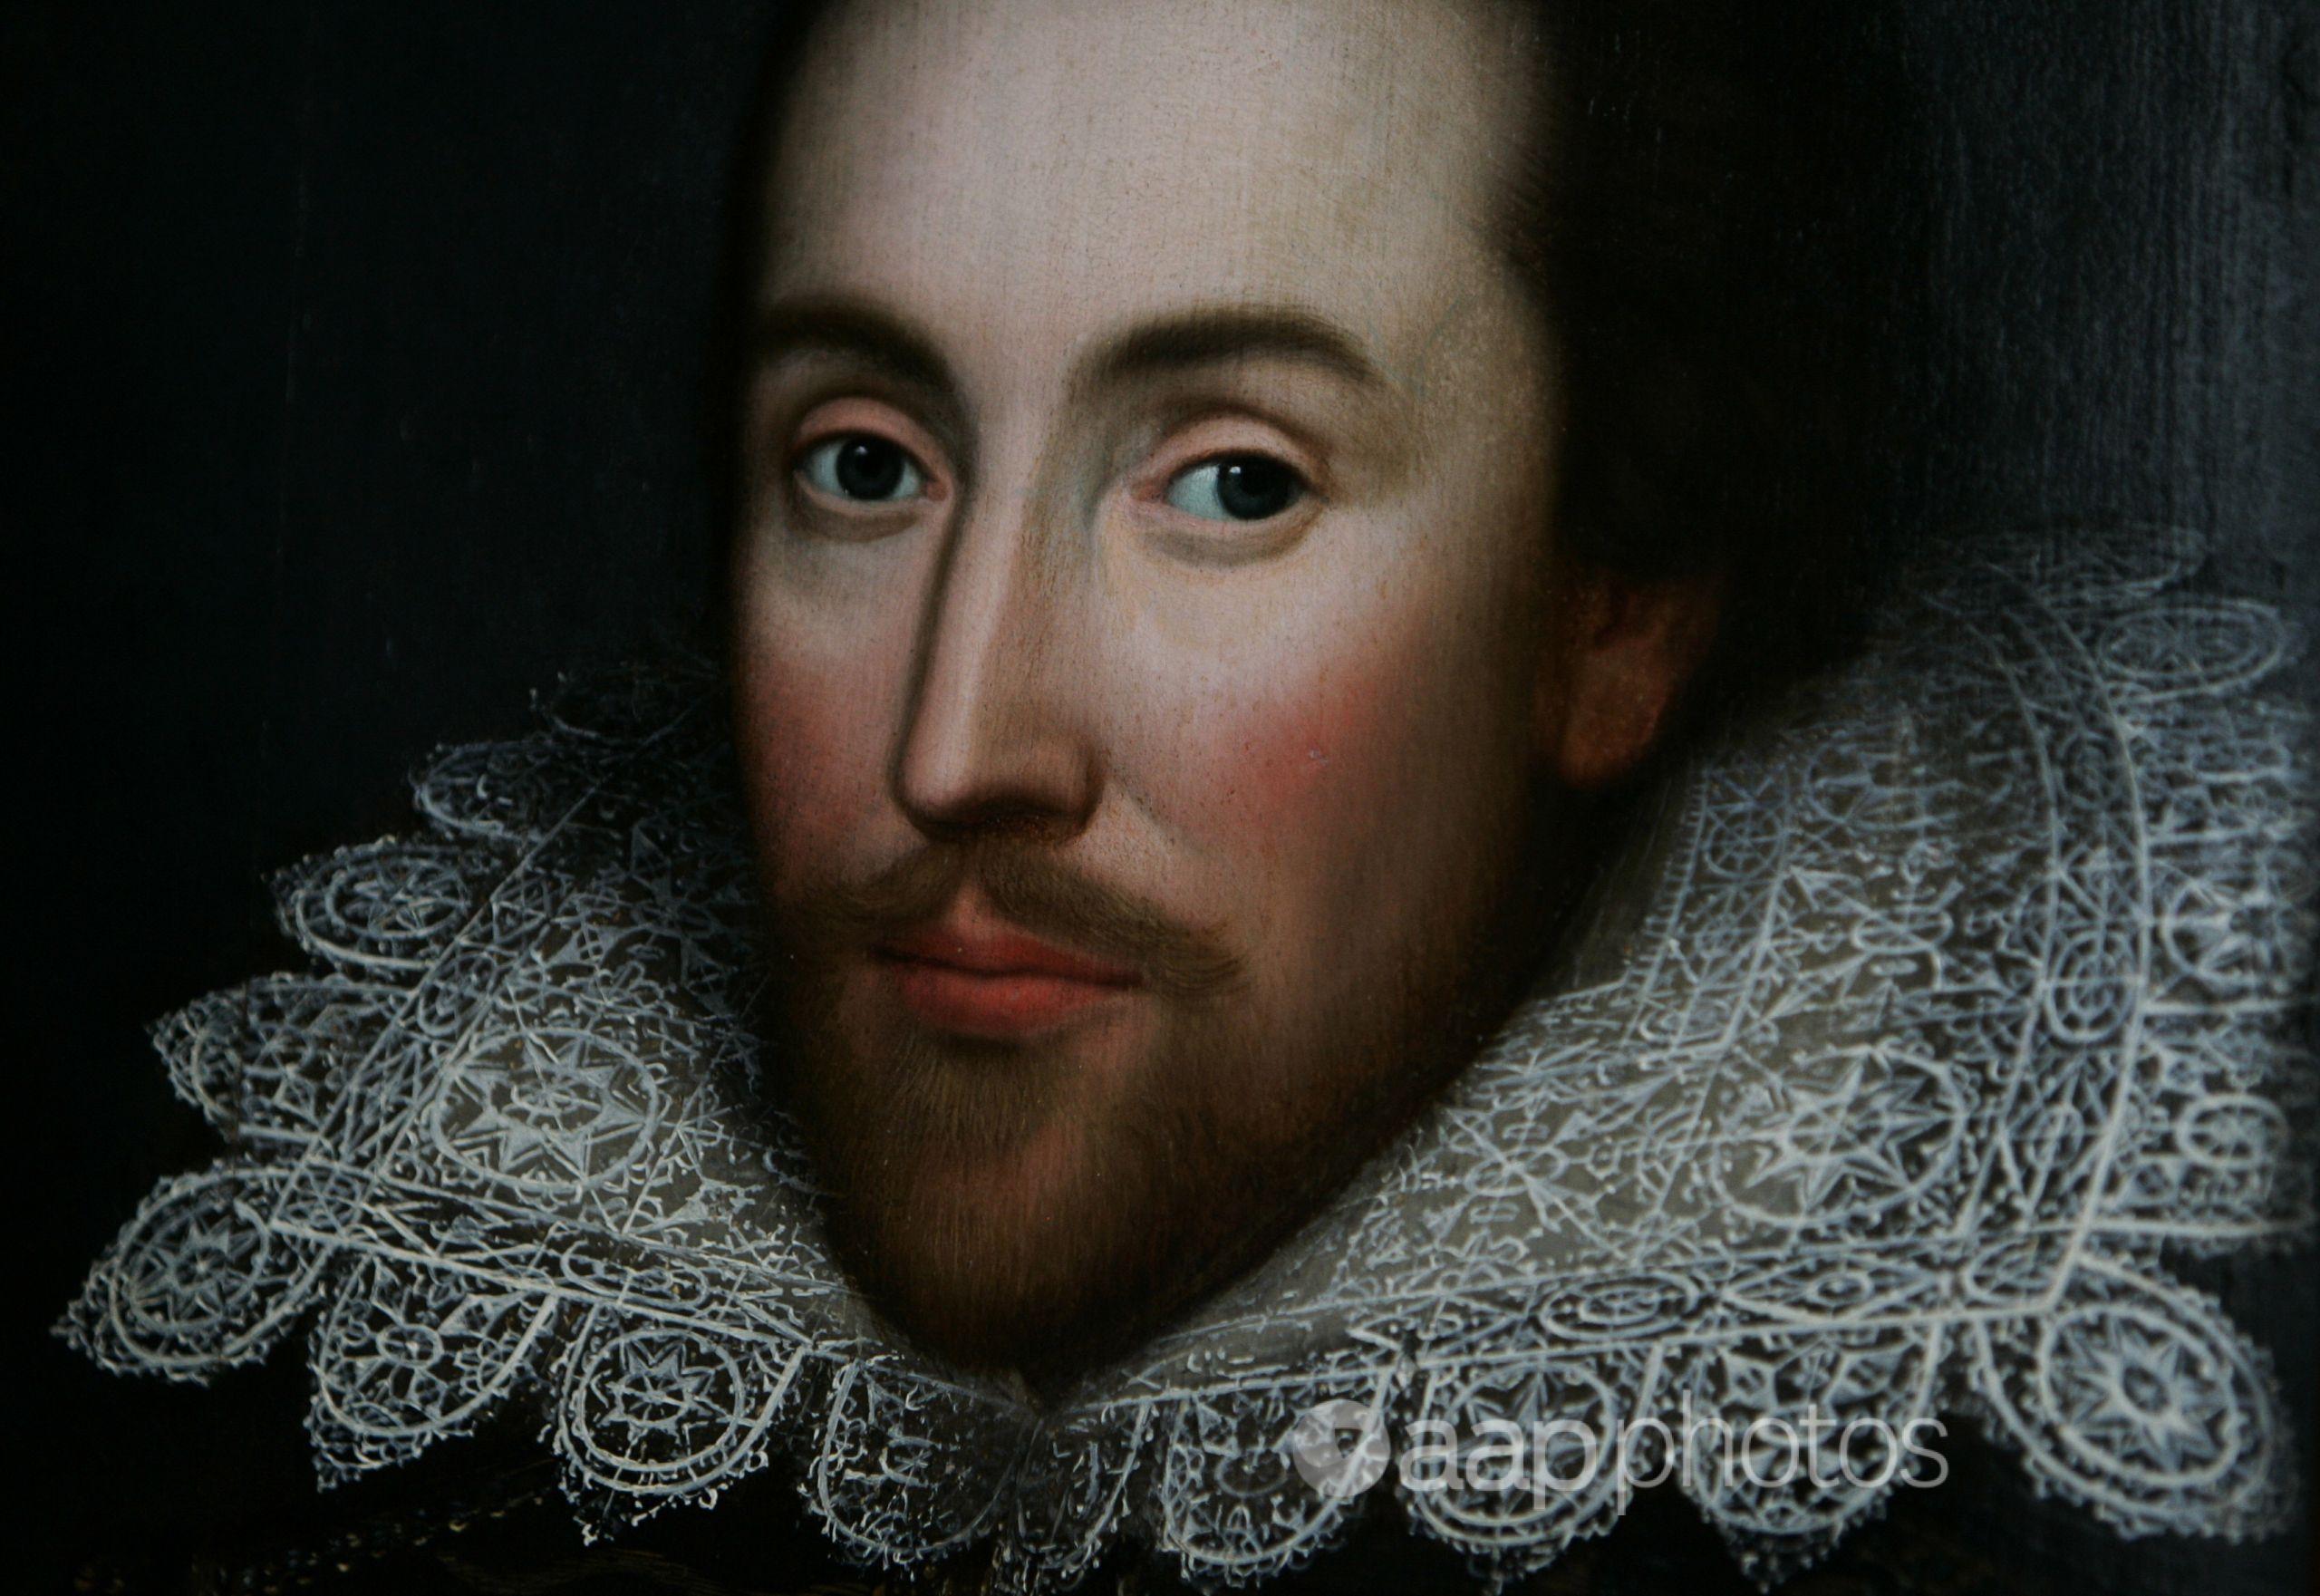 A portrait of William Shakespeare/